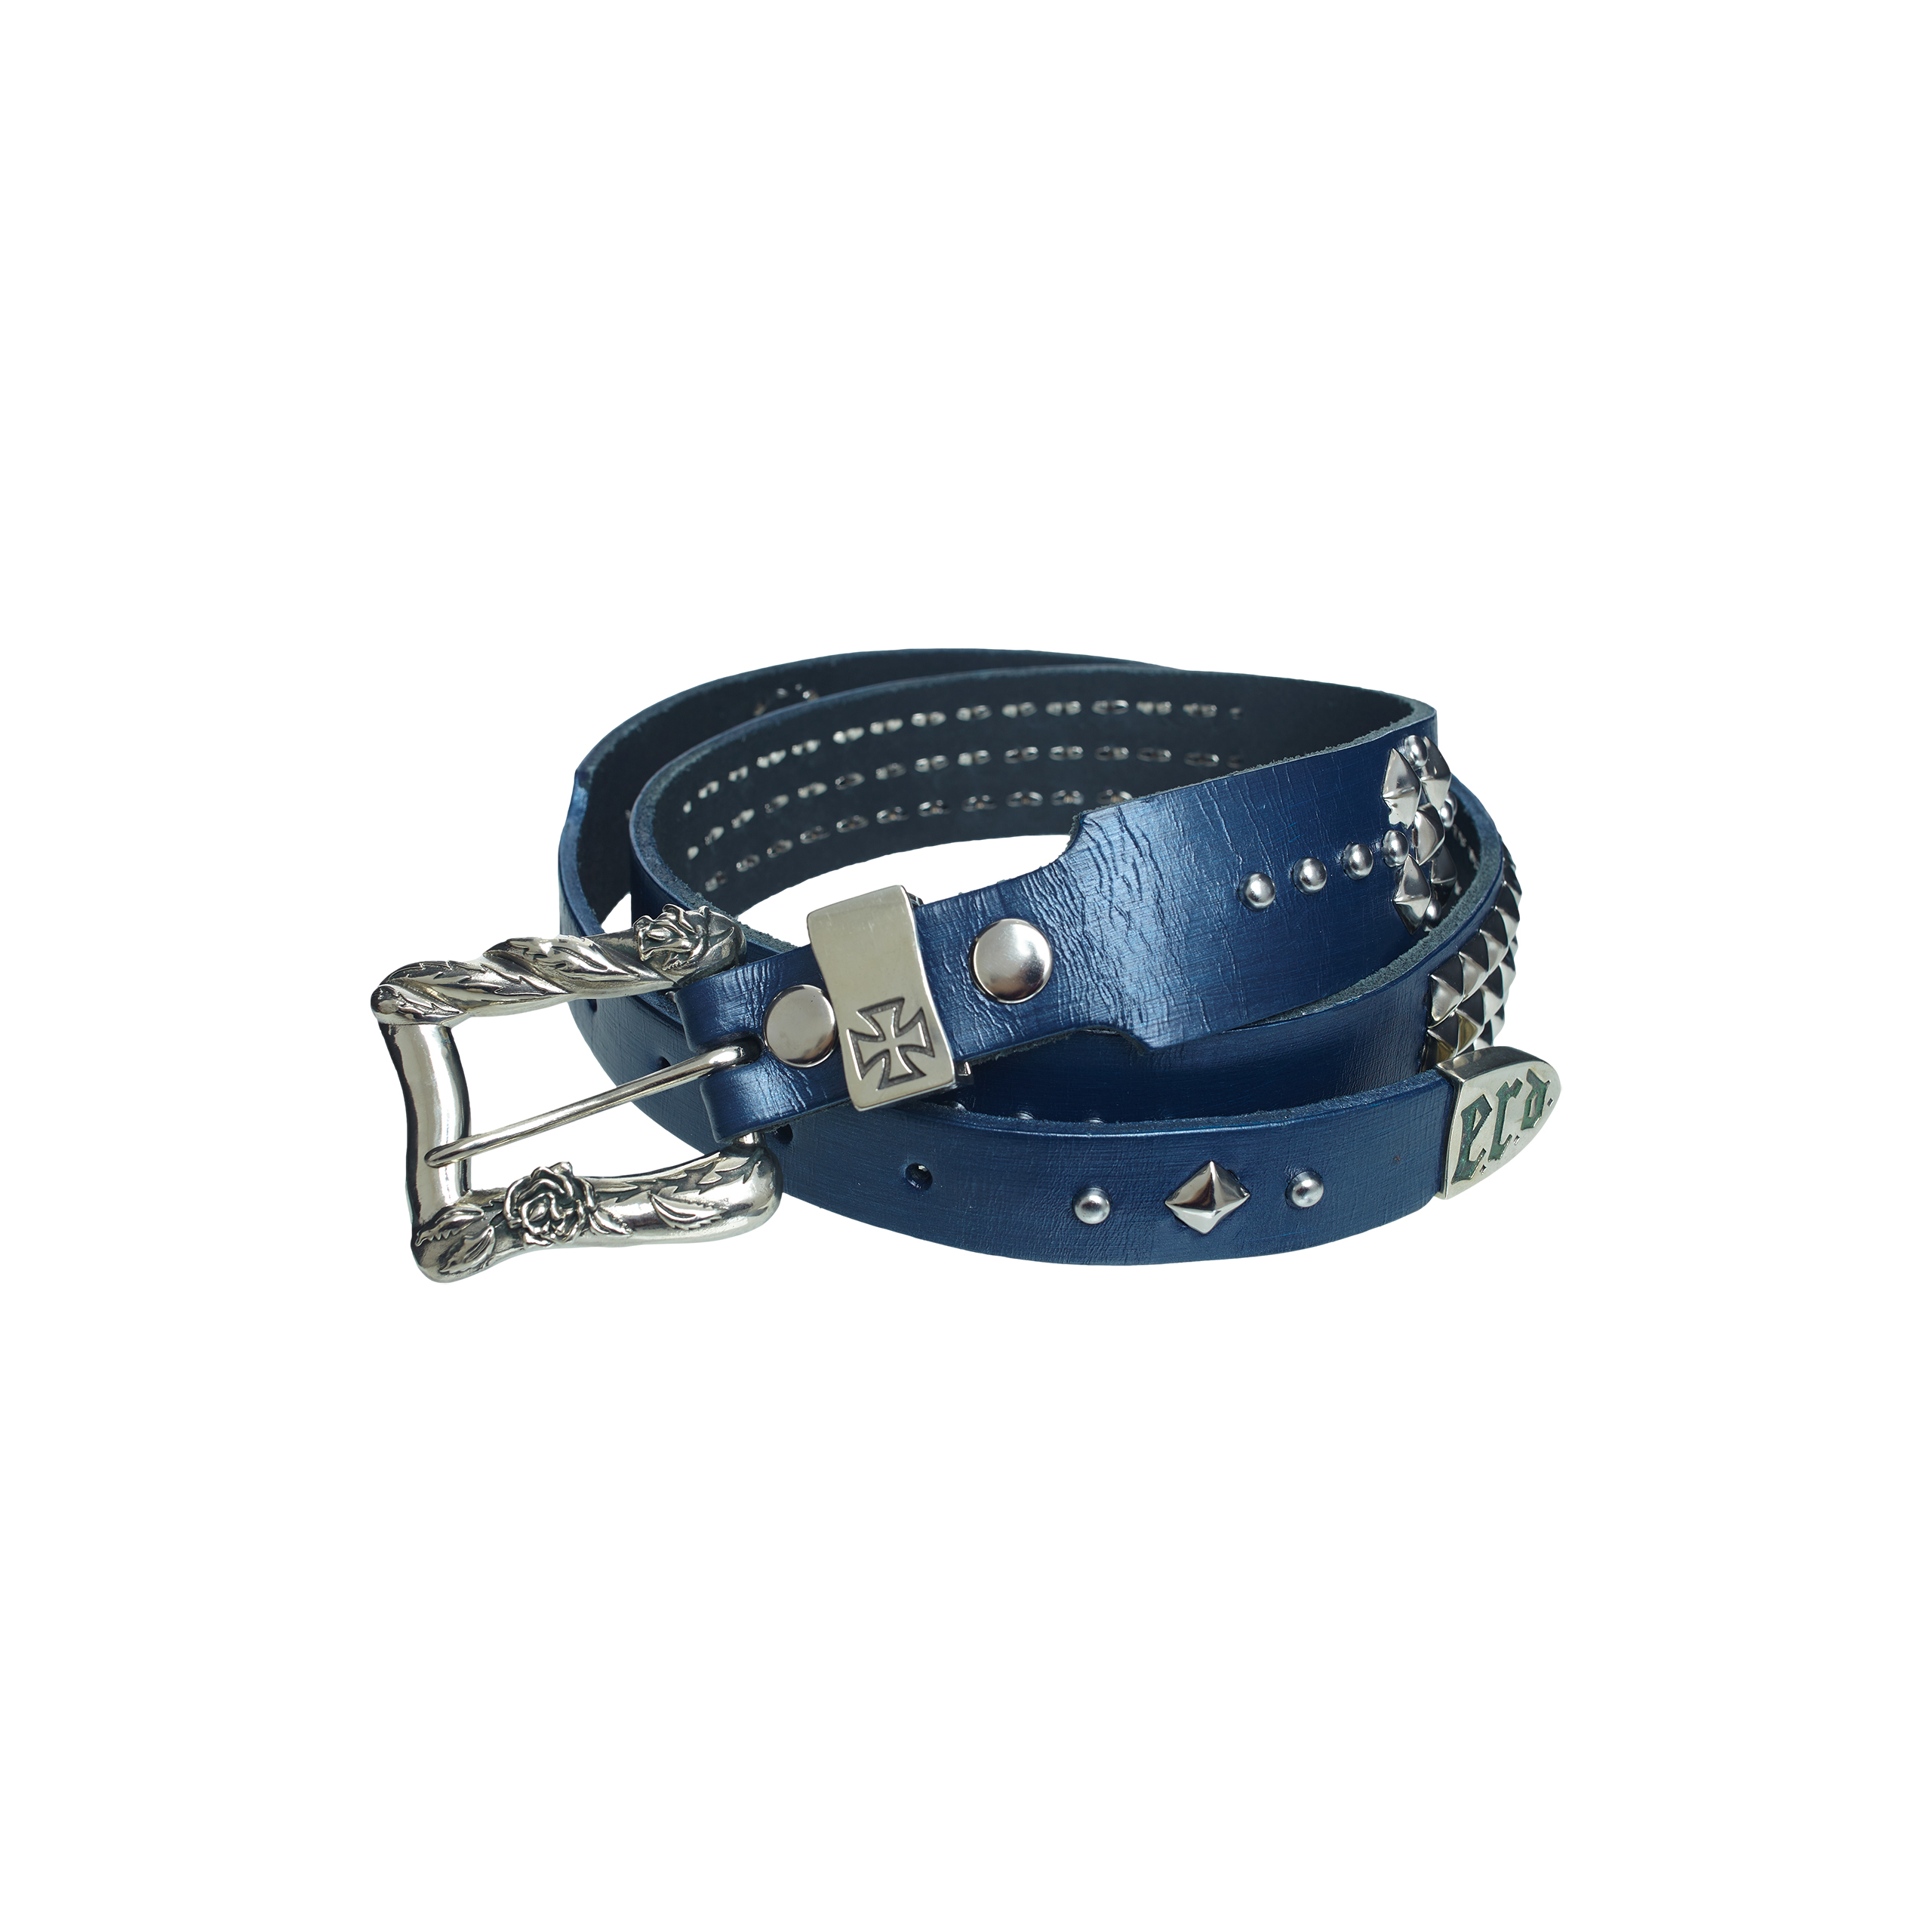 Texas Serenade leather belt